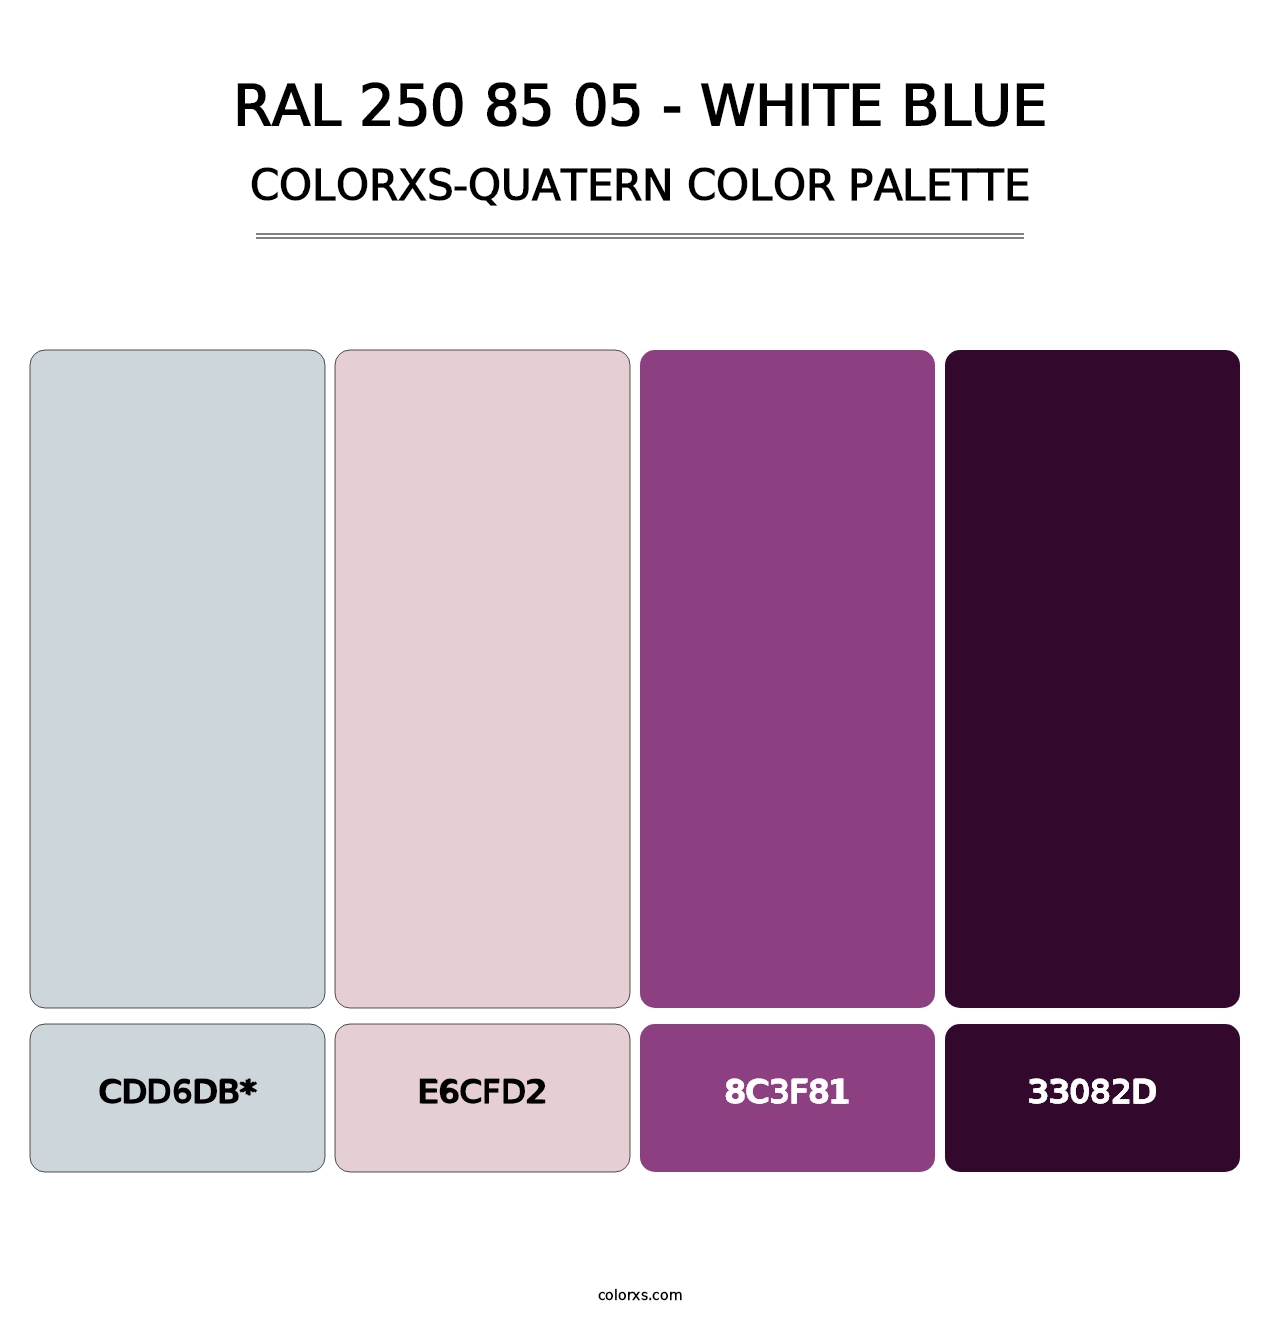 RAL 250 85 05 - White Blue - Colorxs Quatern Palette